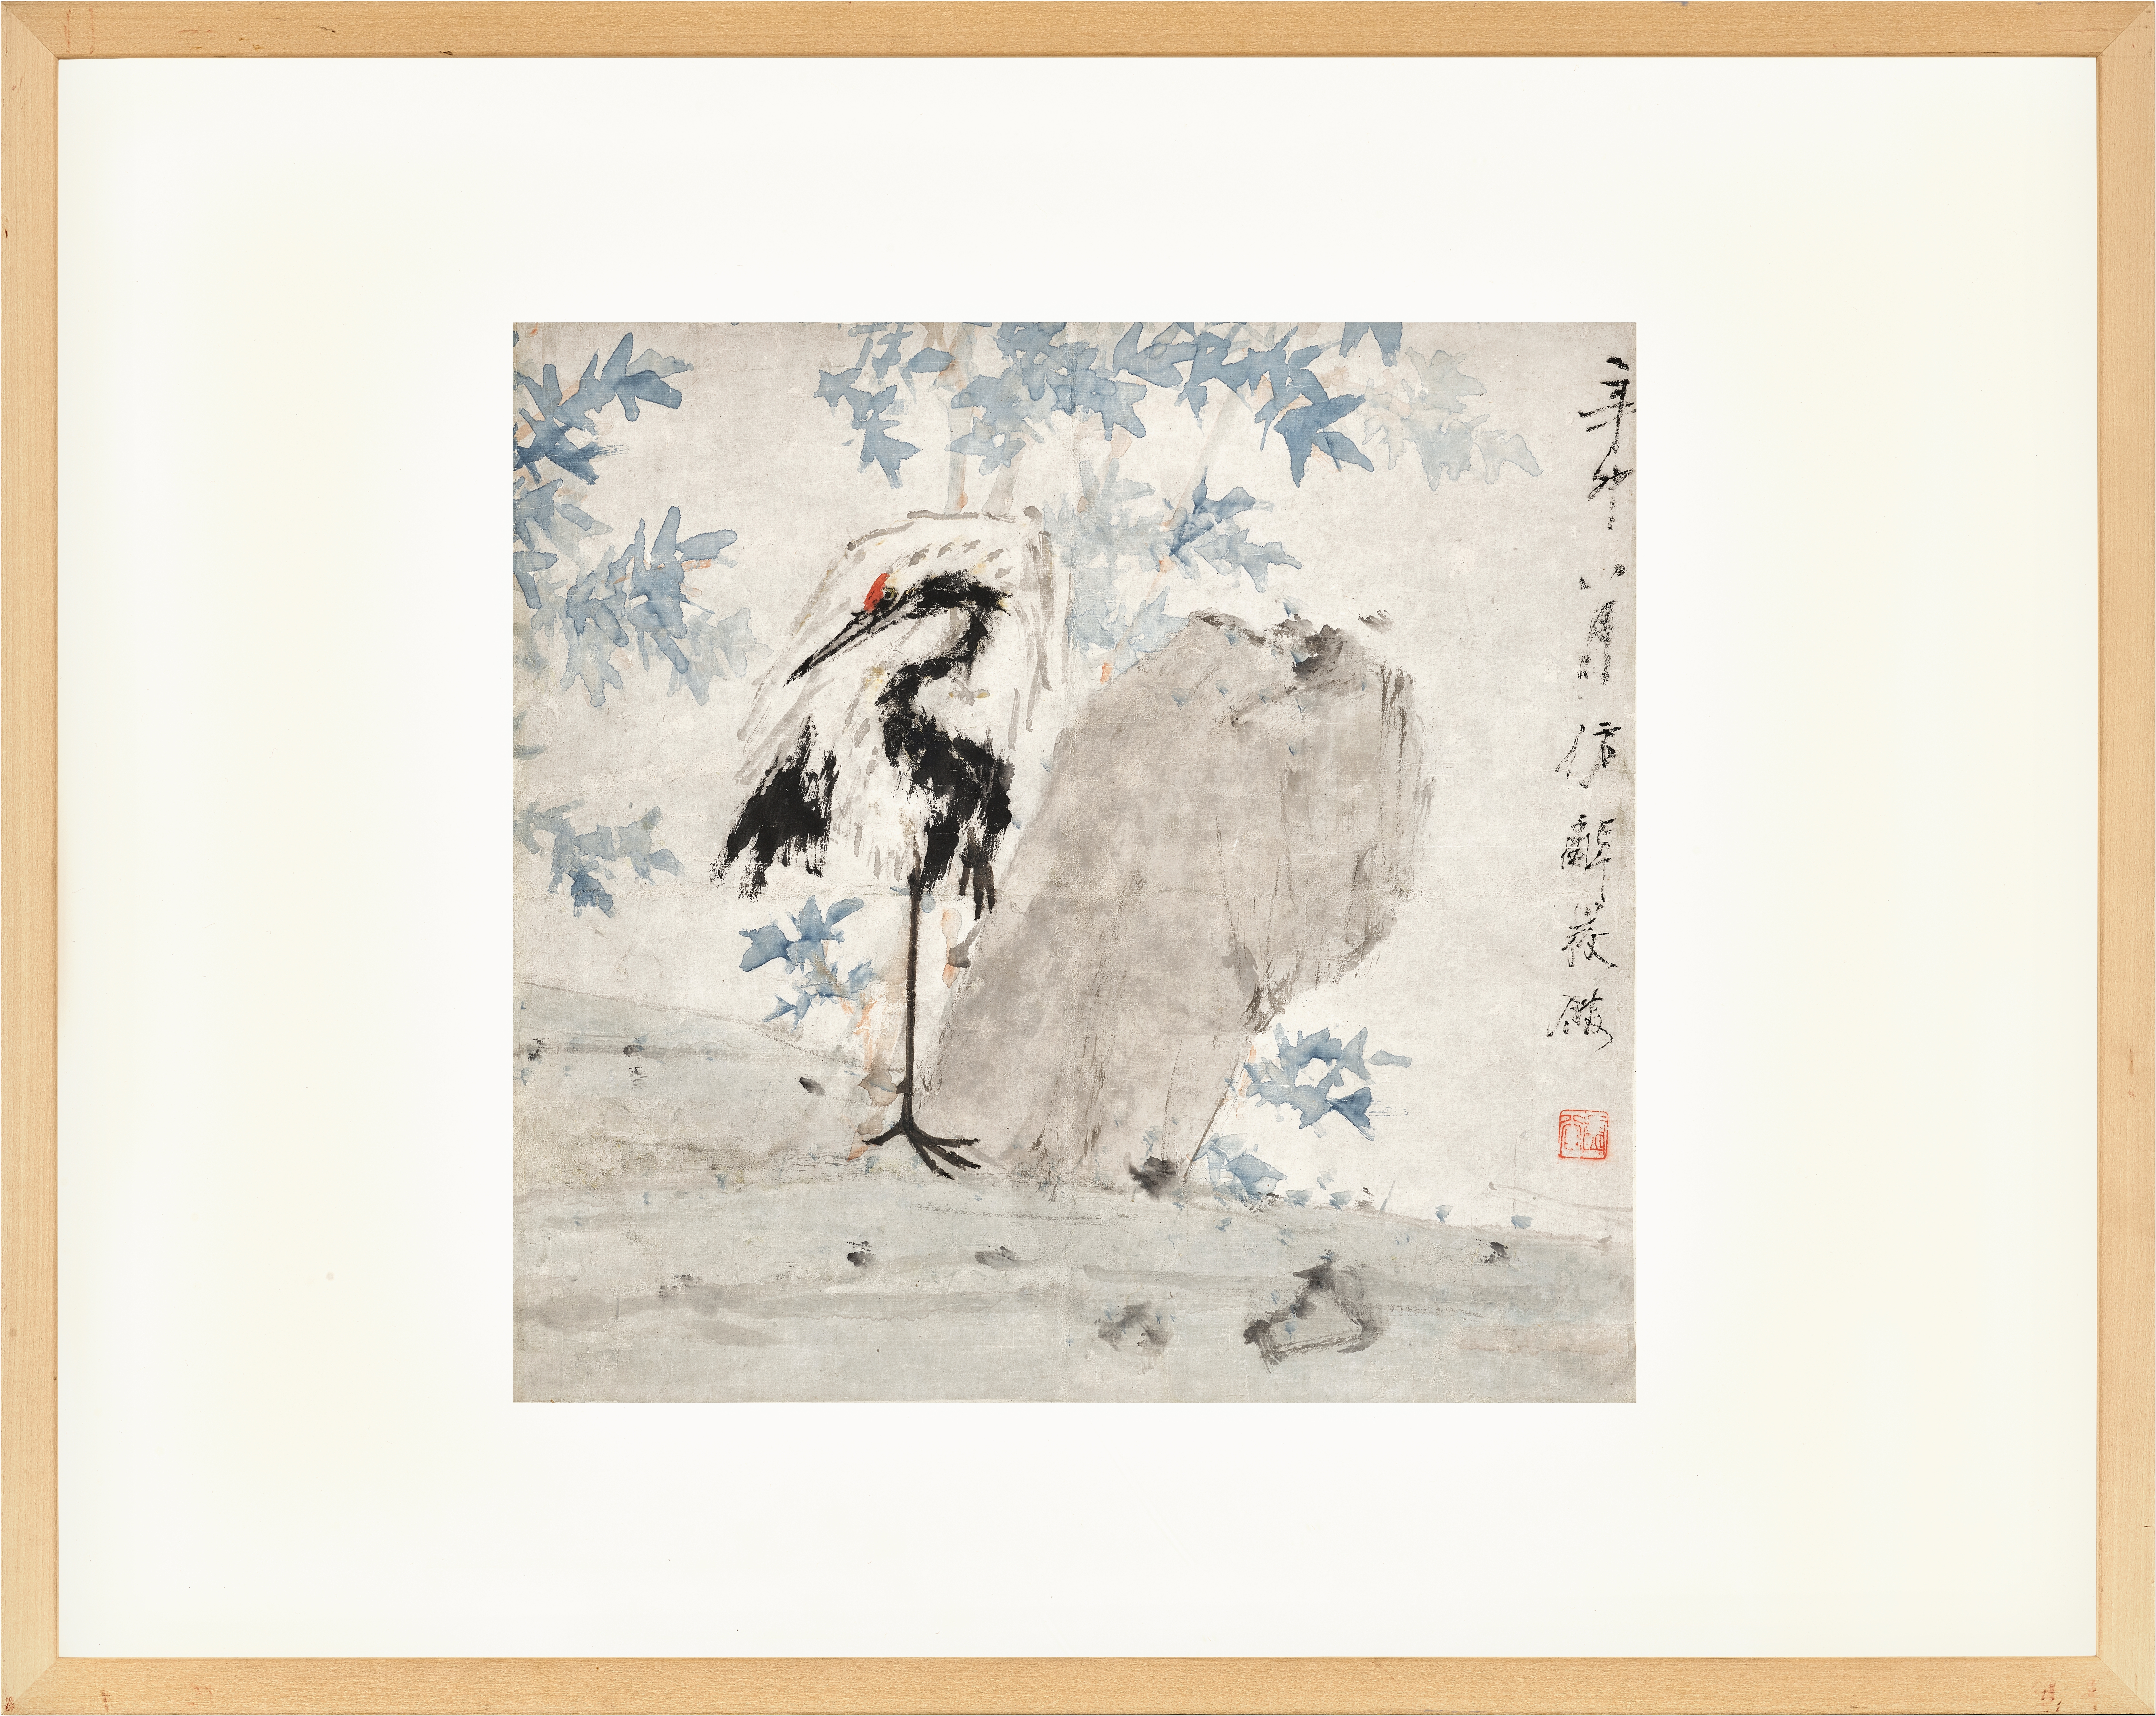 Artwork by Xu Gu, Xu Gu, Crane, Made of ink and colour on paper